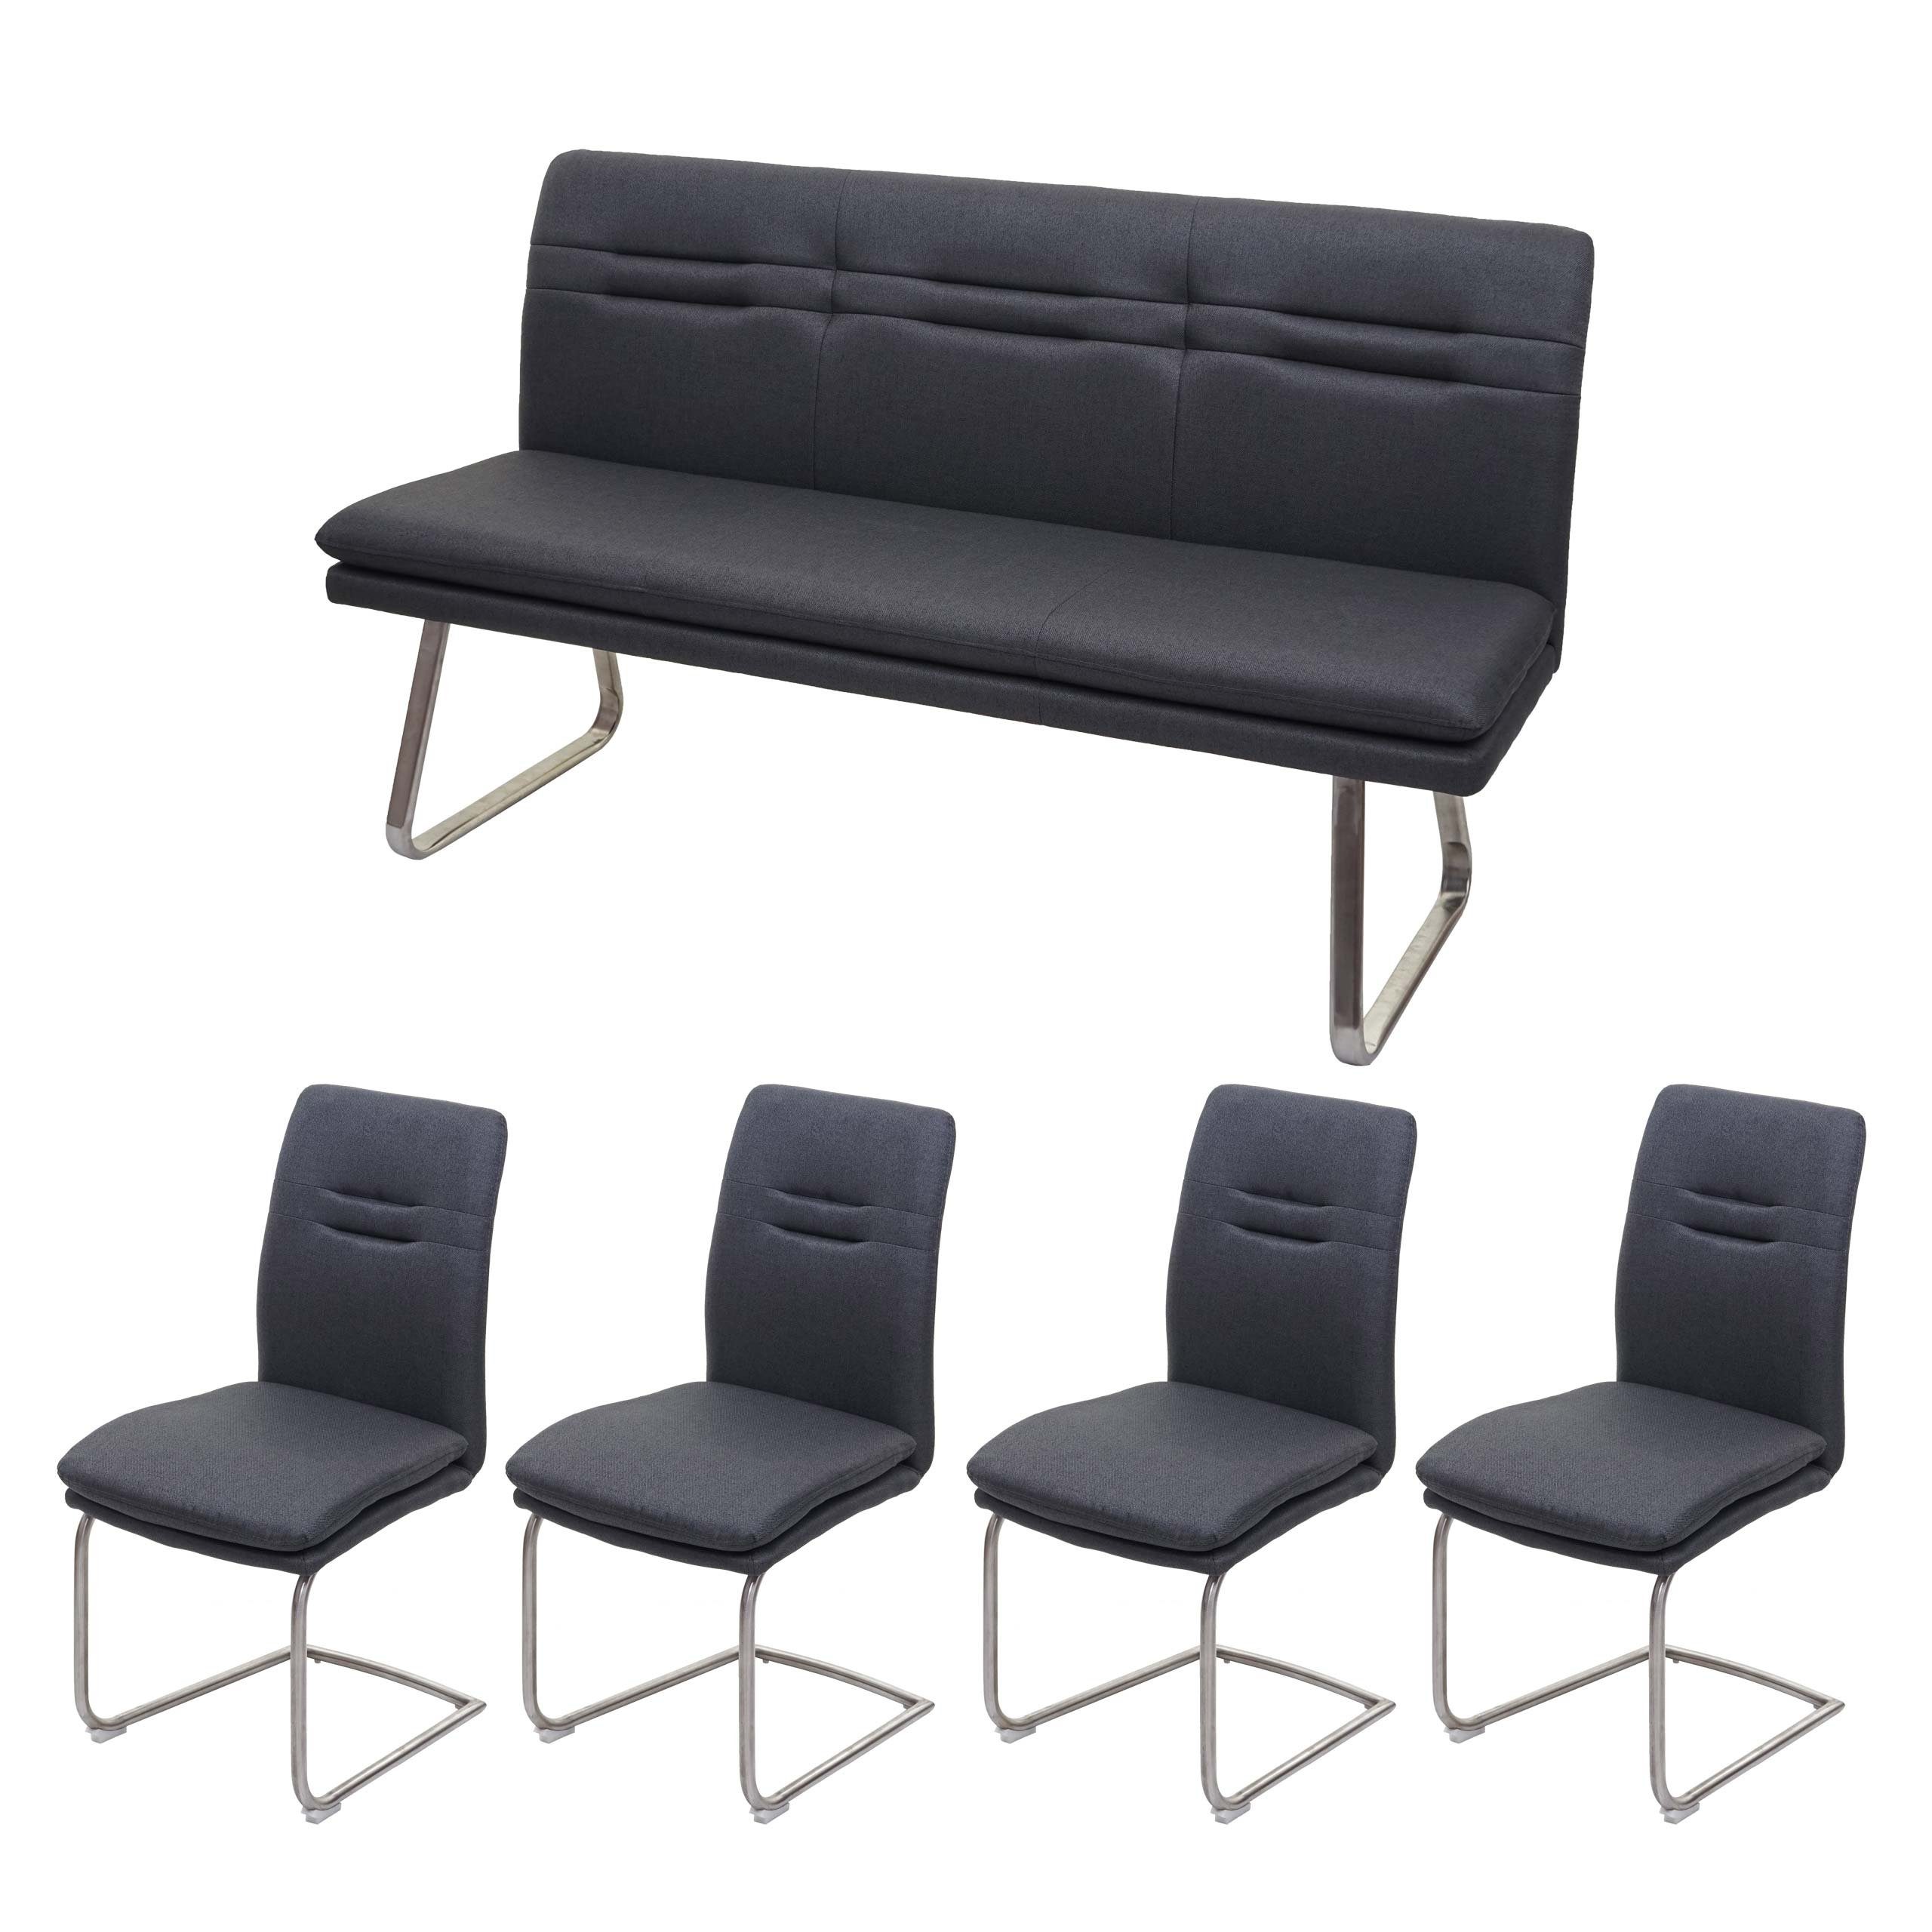 MCW Essgruppe MCW-H70-B, (Set, 5-tlg., 4 Stühle, 1 Tisch, 1 Bank), Bequeme Formgebung, Stabiles Gestell dunkelgrau